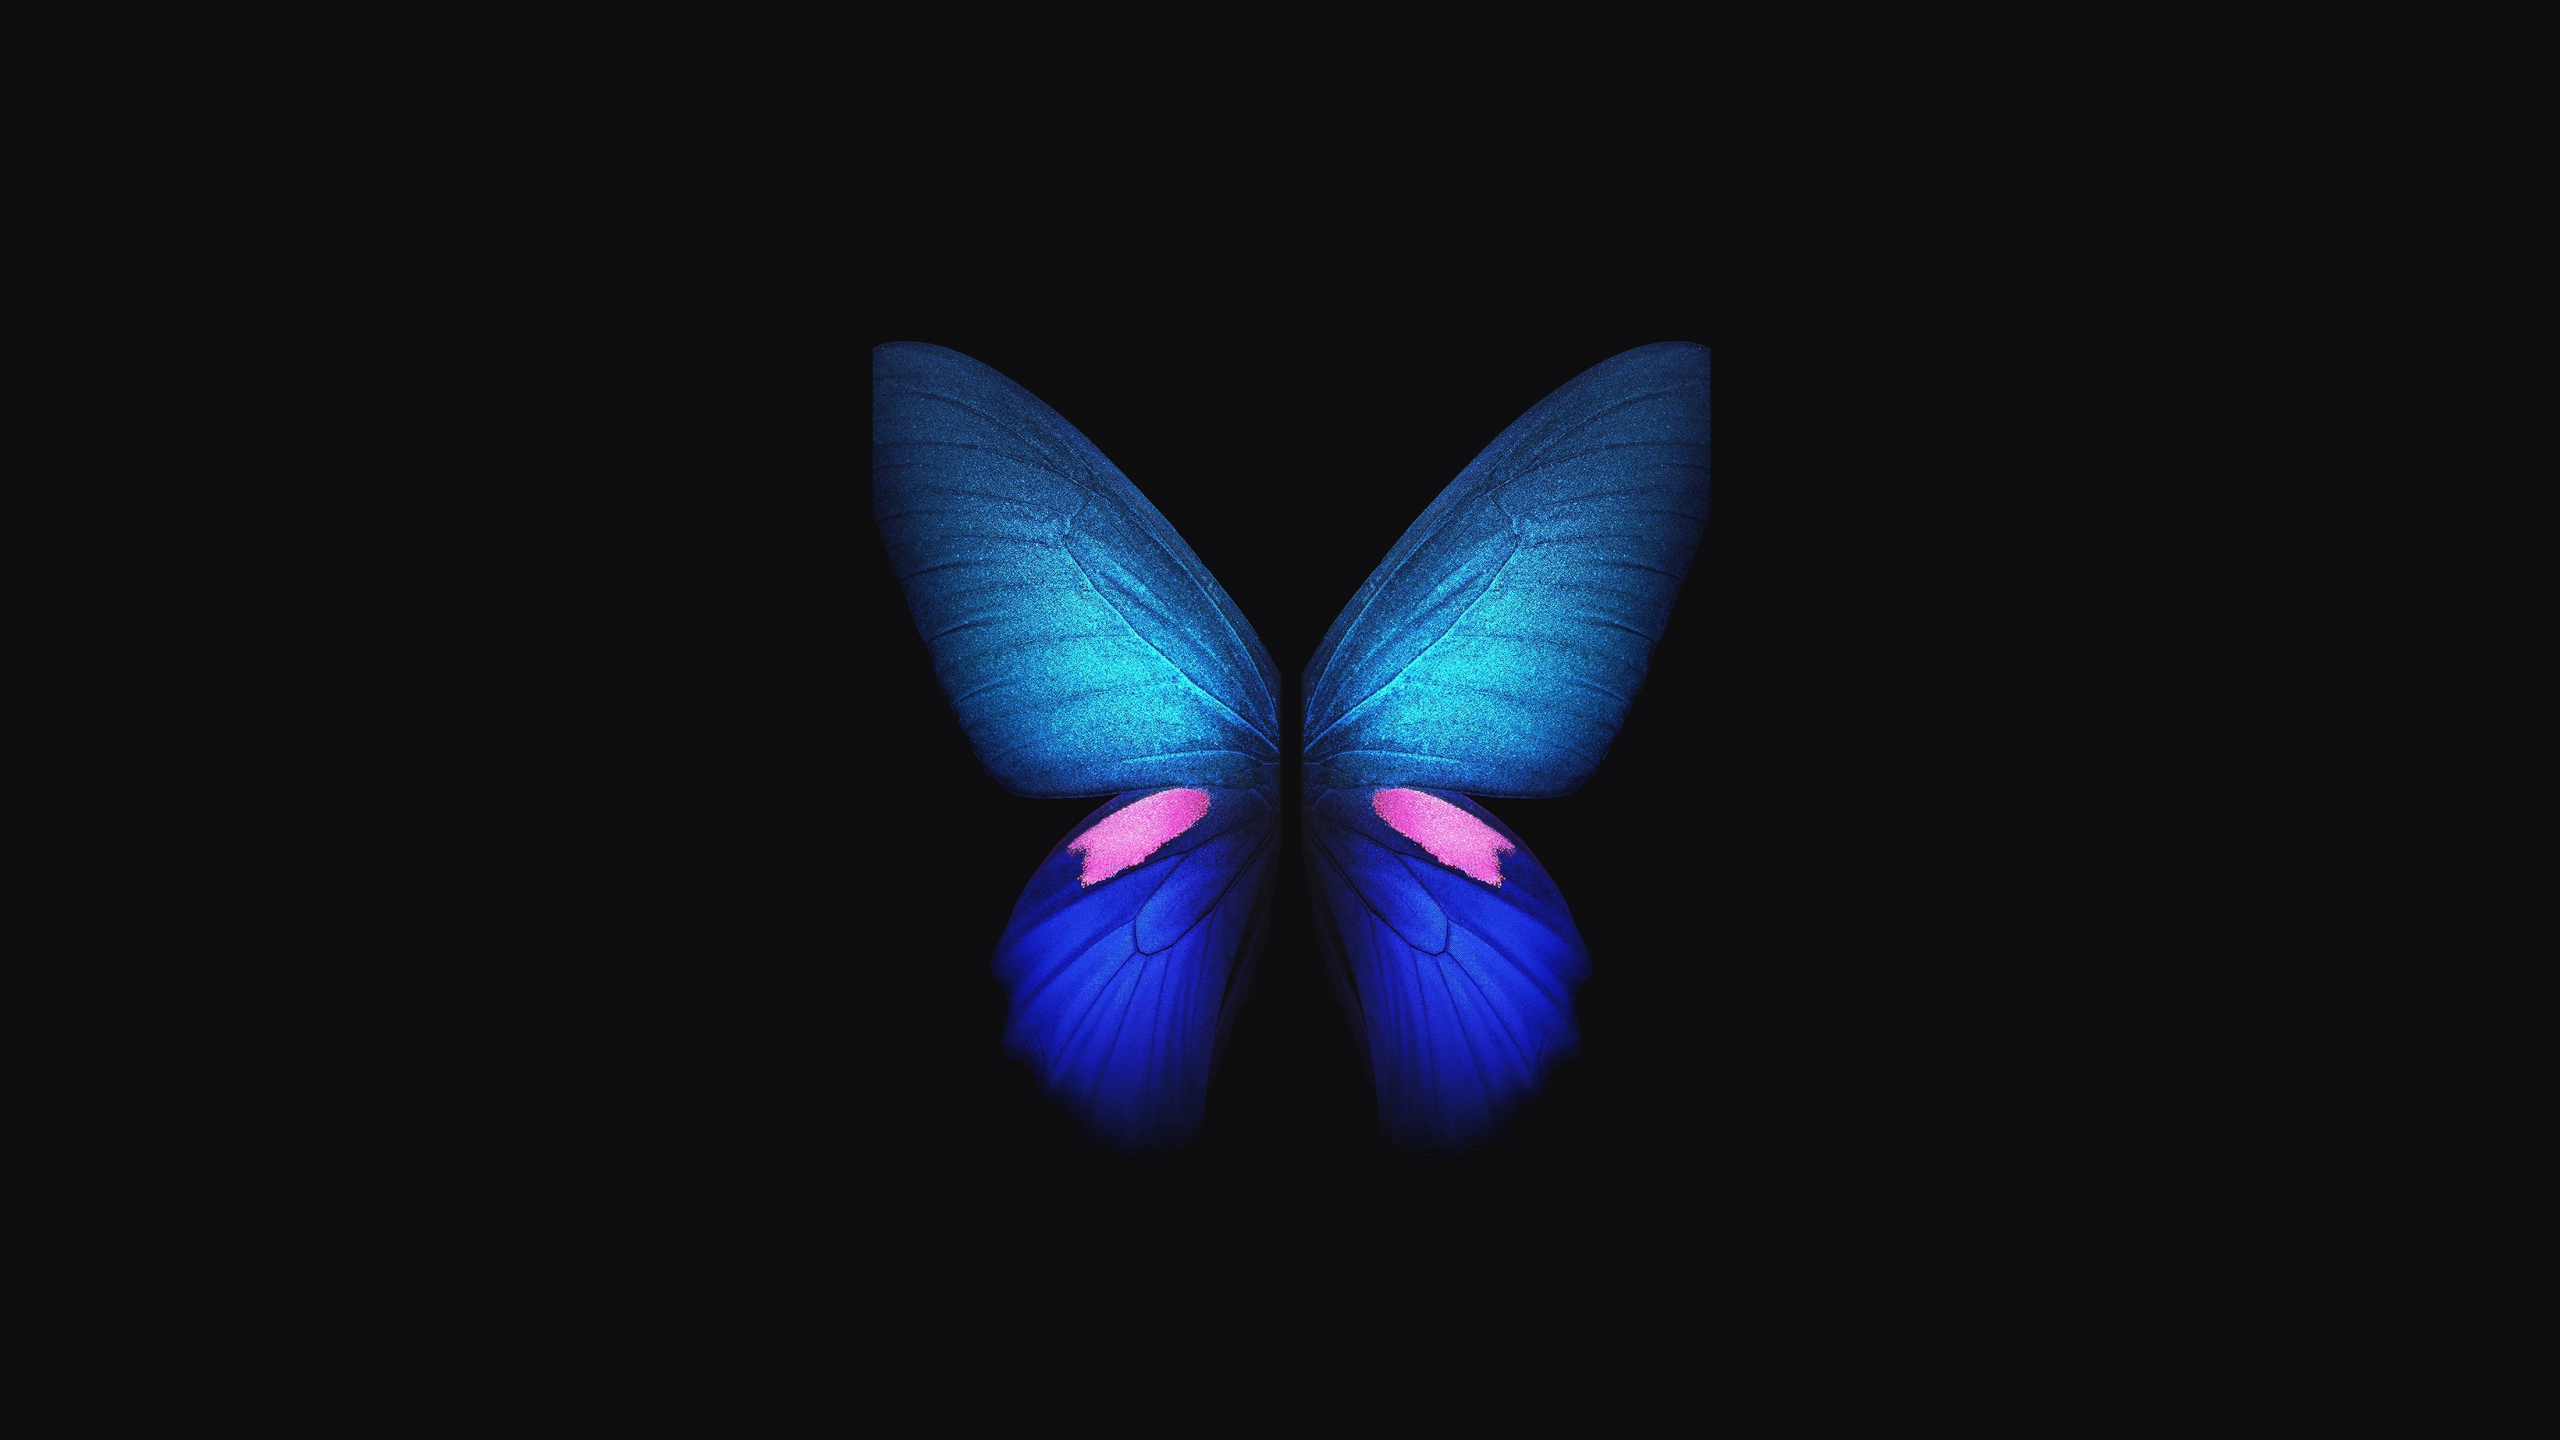 Download wallpaper 2560x1440 samsung galaxy fold, blue butterfly ...